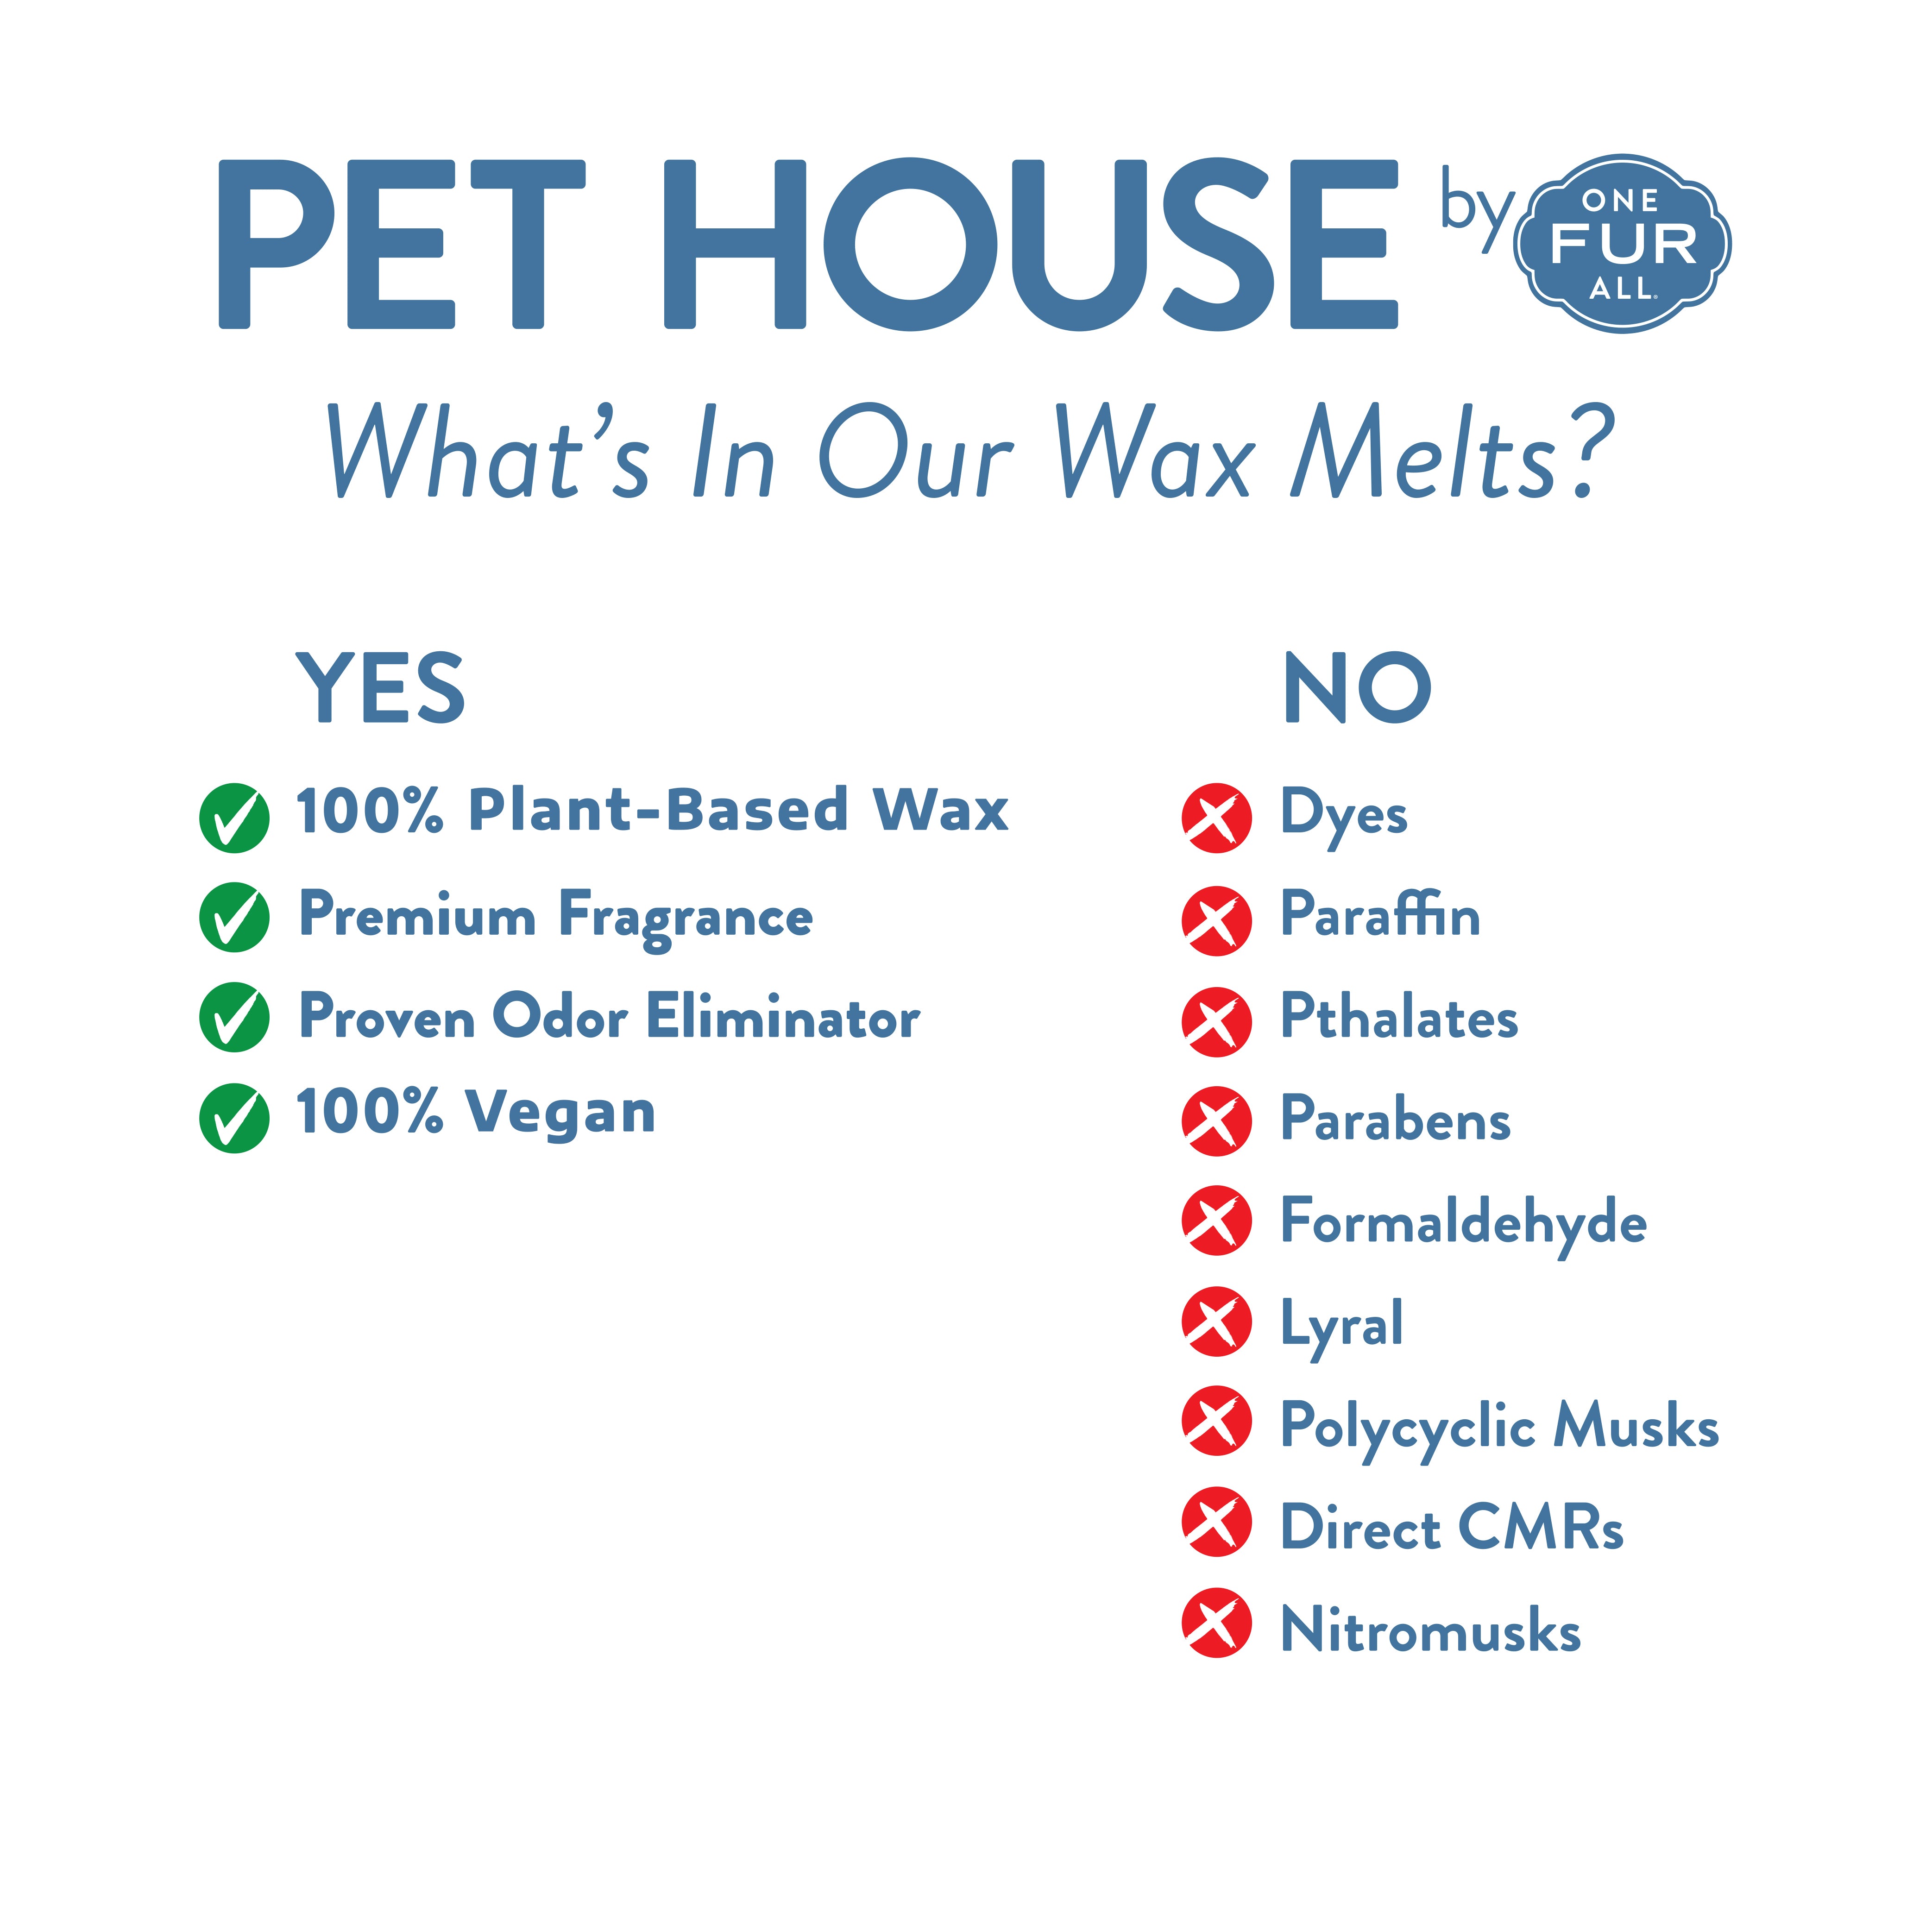  Pet Friendly Wax Melt, Pet Safe Wax Melt, All Natural Wax Melt, Non-Toxic Wax Melt, Pet Odor Eliminator, Pure Soy Wax Melts